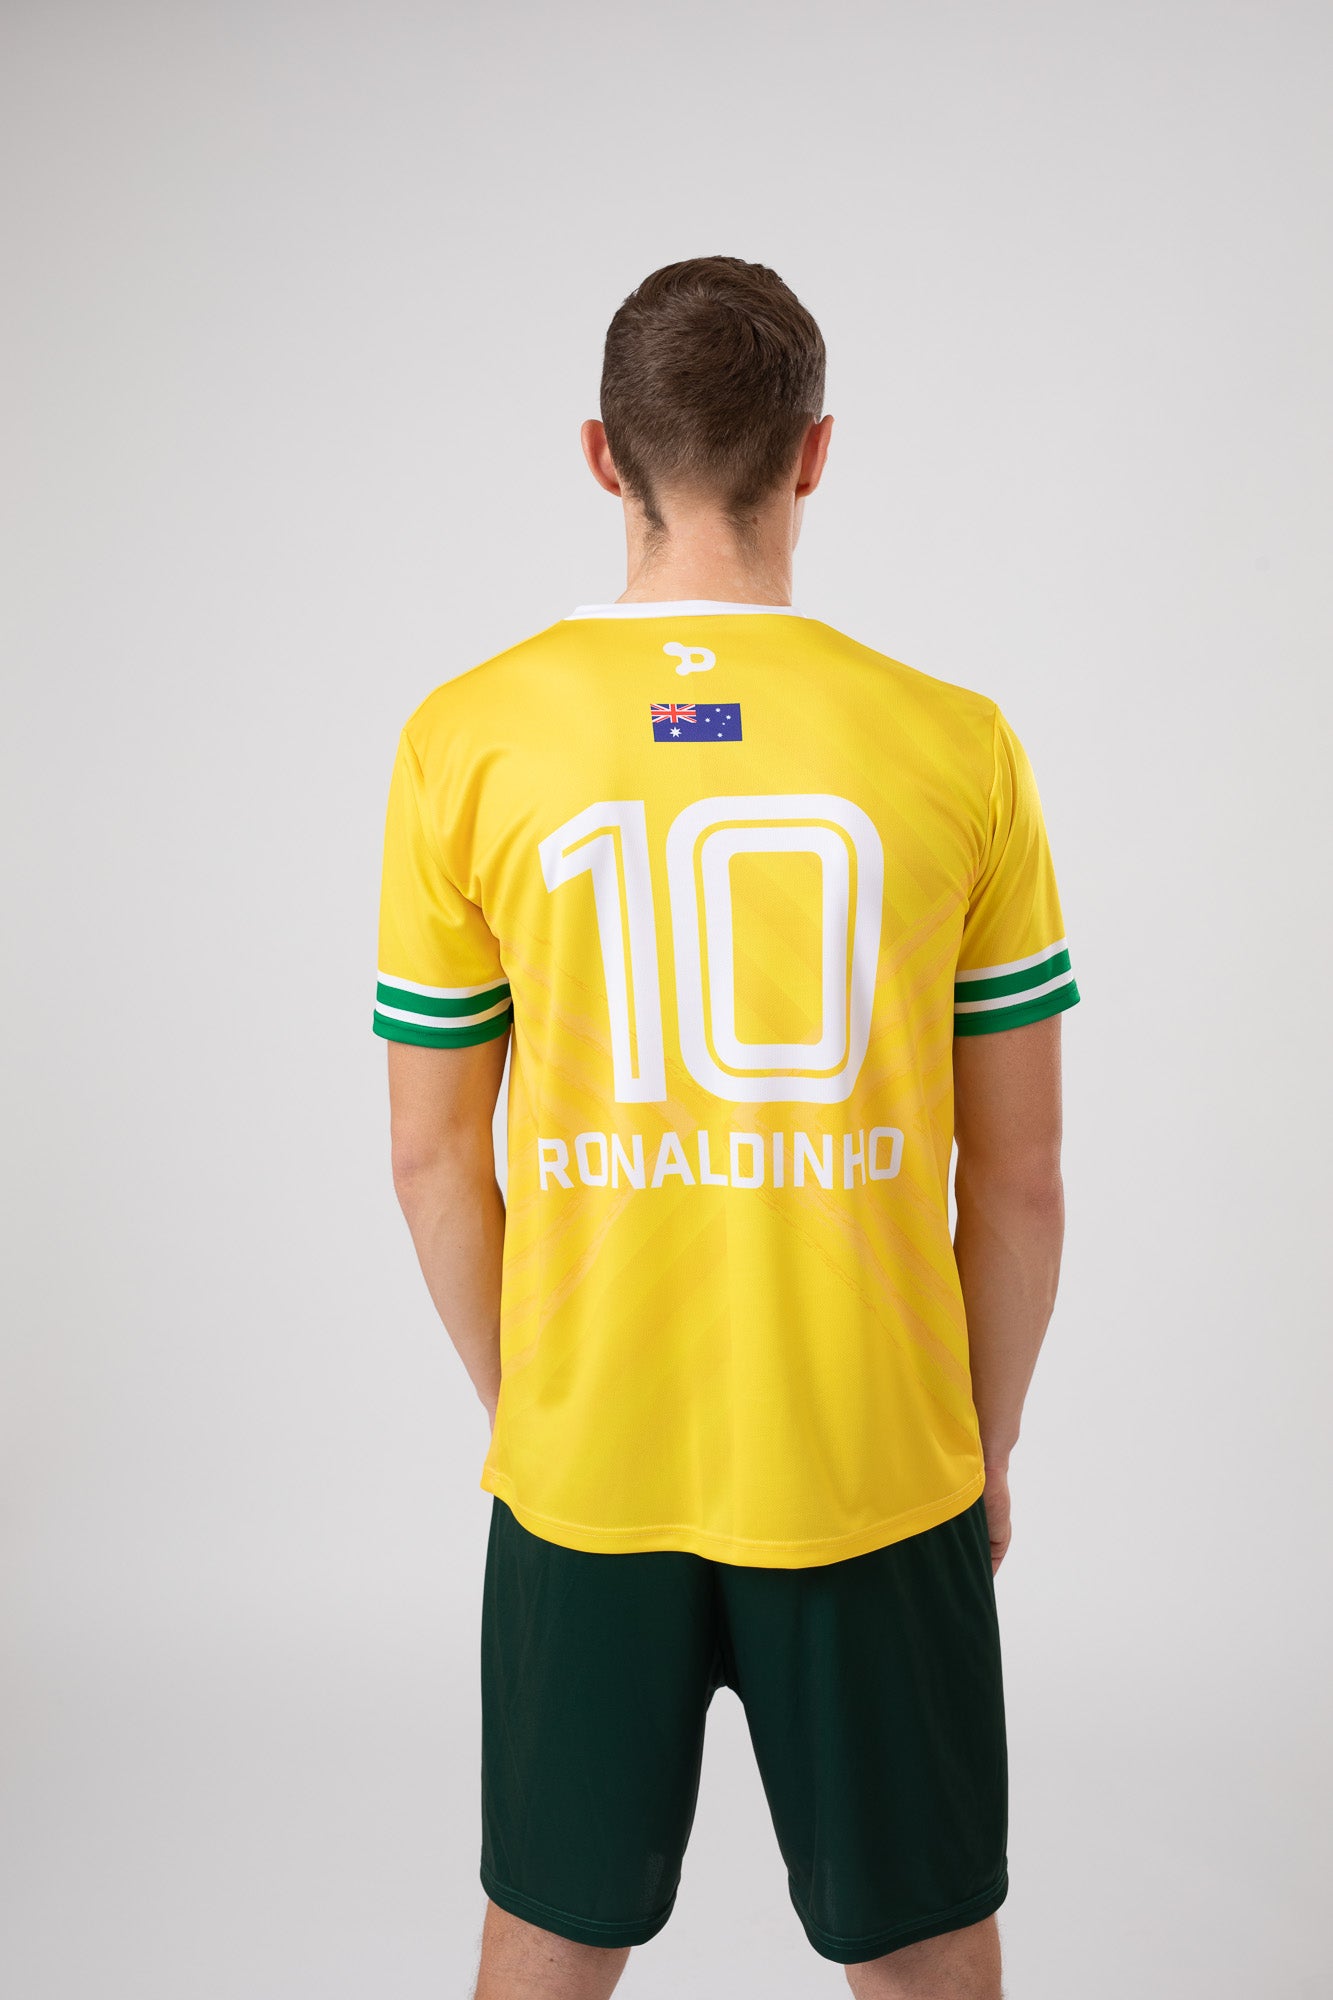 Ronaldinho Australia Jersey/Camisa Replica